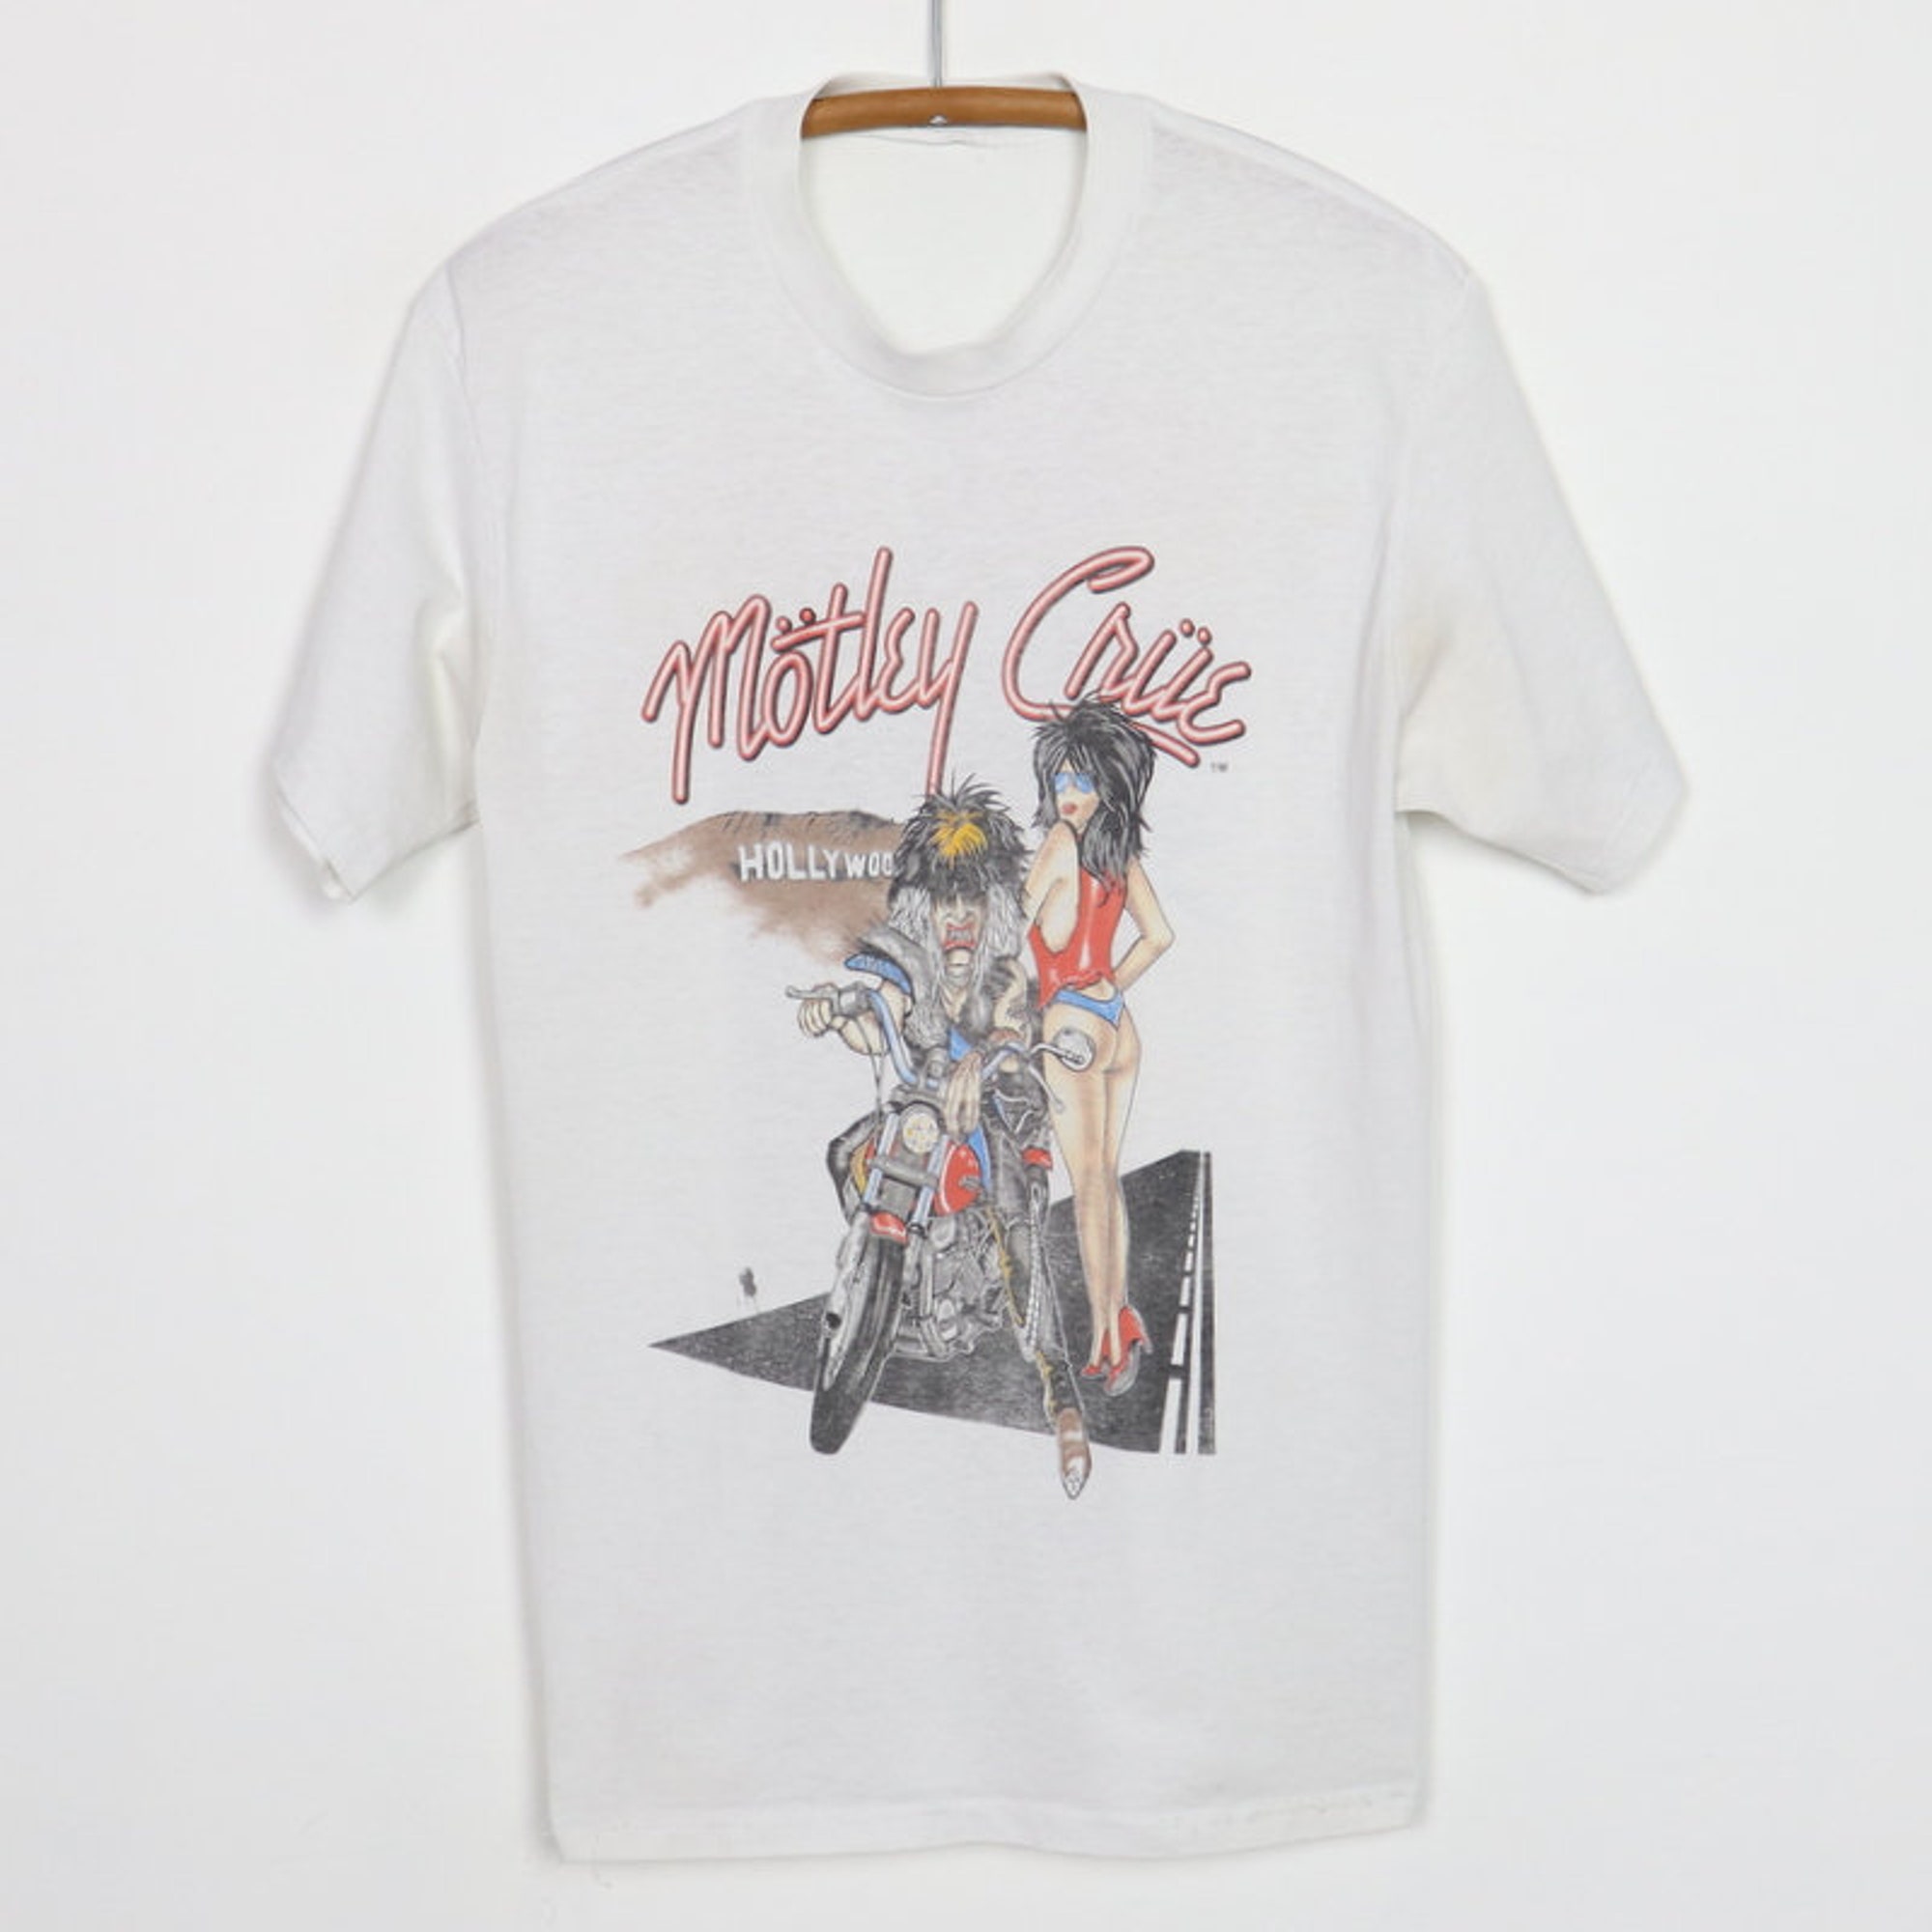 Discover vintage 1987 Motley Crue Girls Girls Girls California Tour Shirt